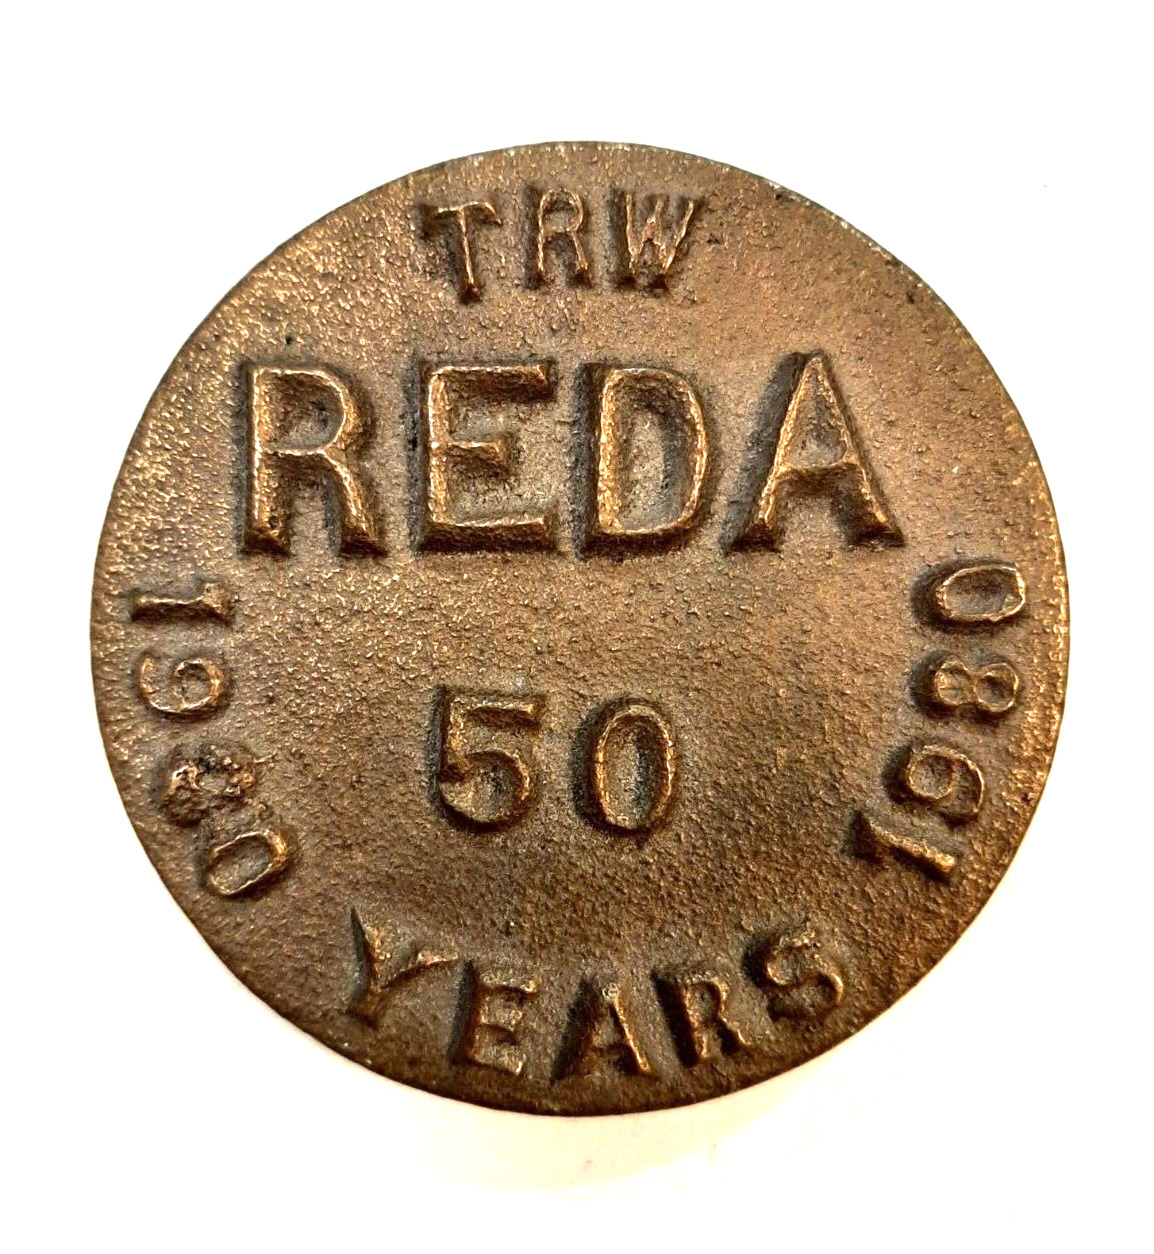 TRW REDA Petroleum Pump 1930-1980 Brass Advertising Paperweight Bartlesville